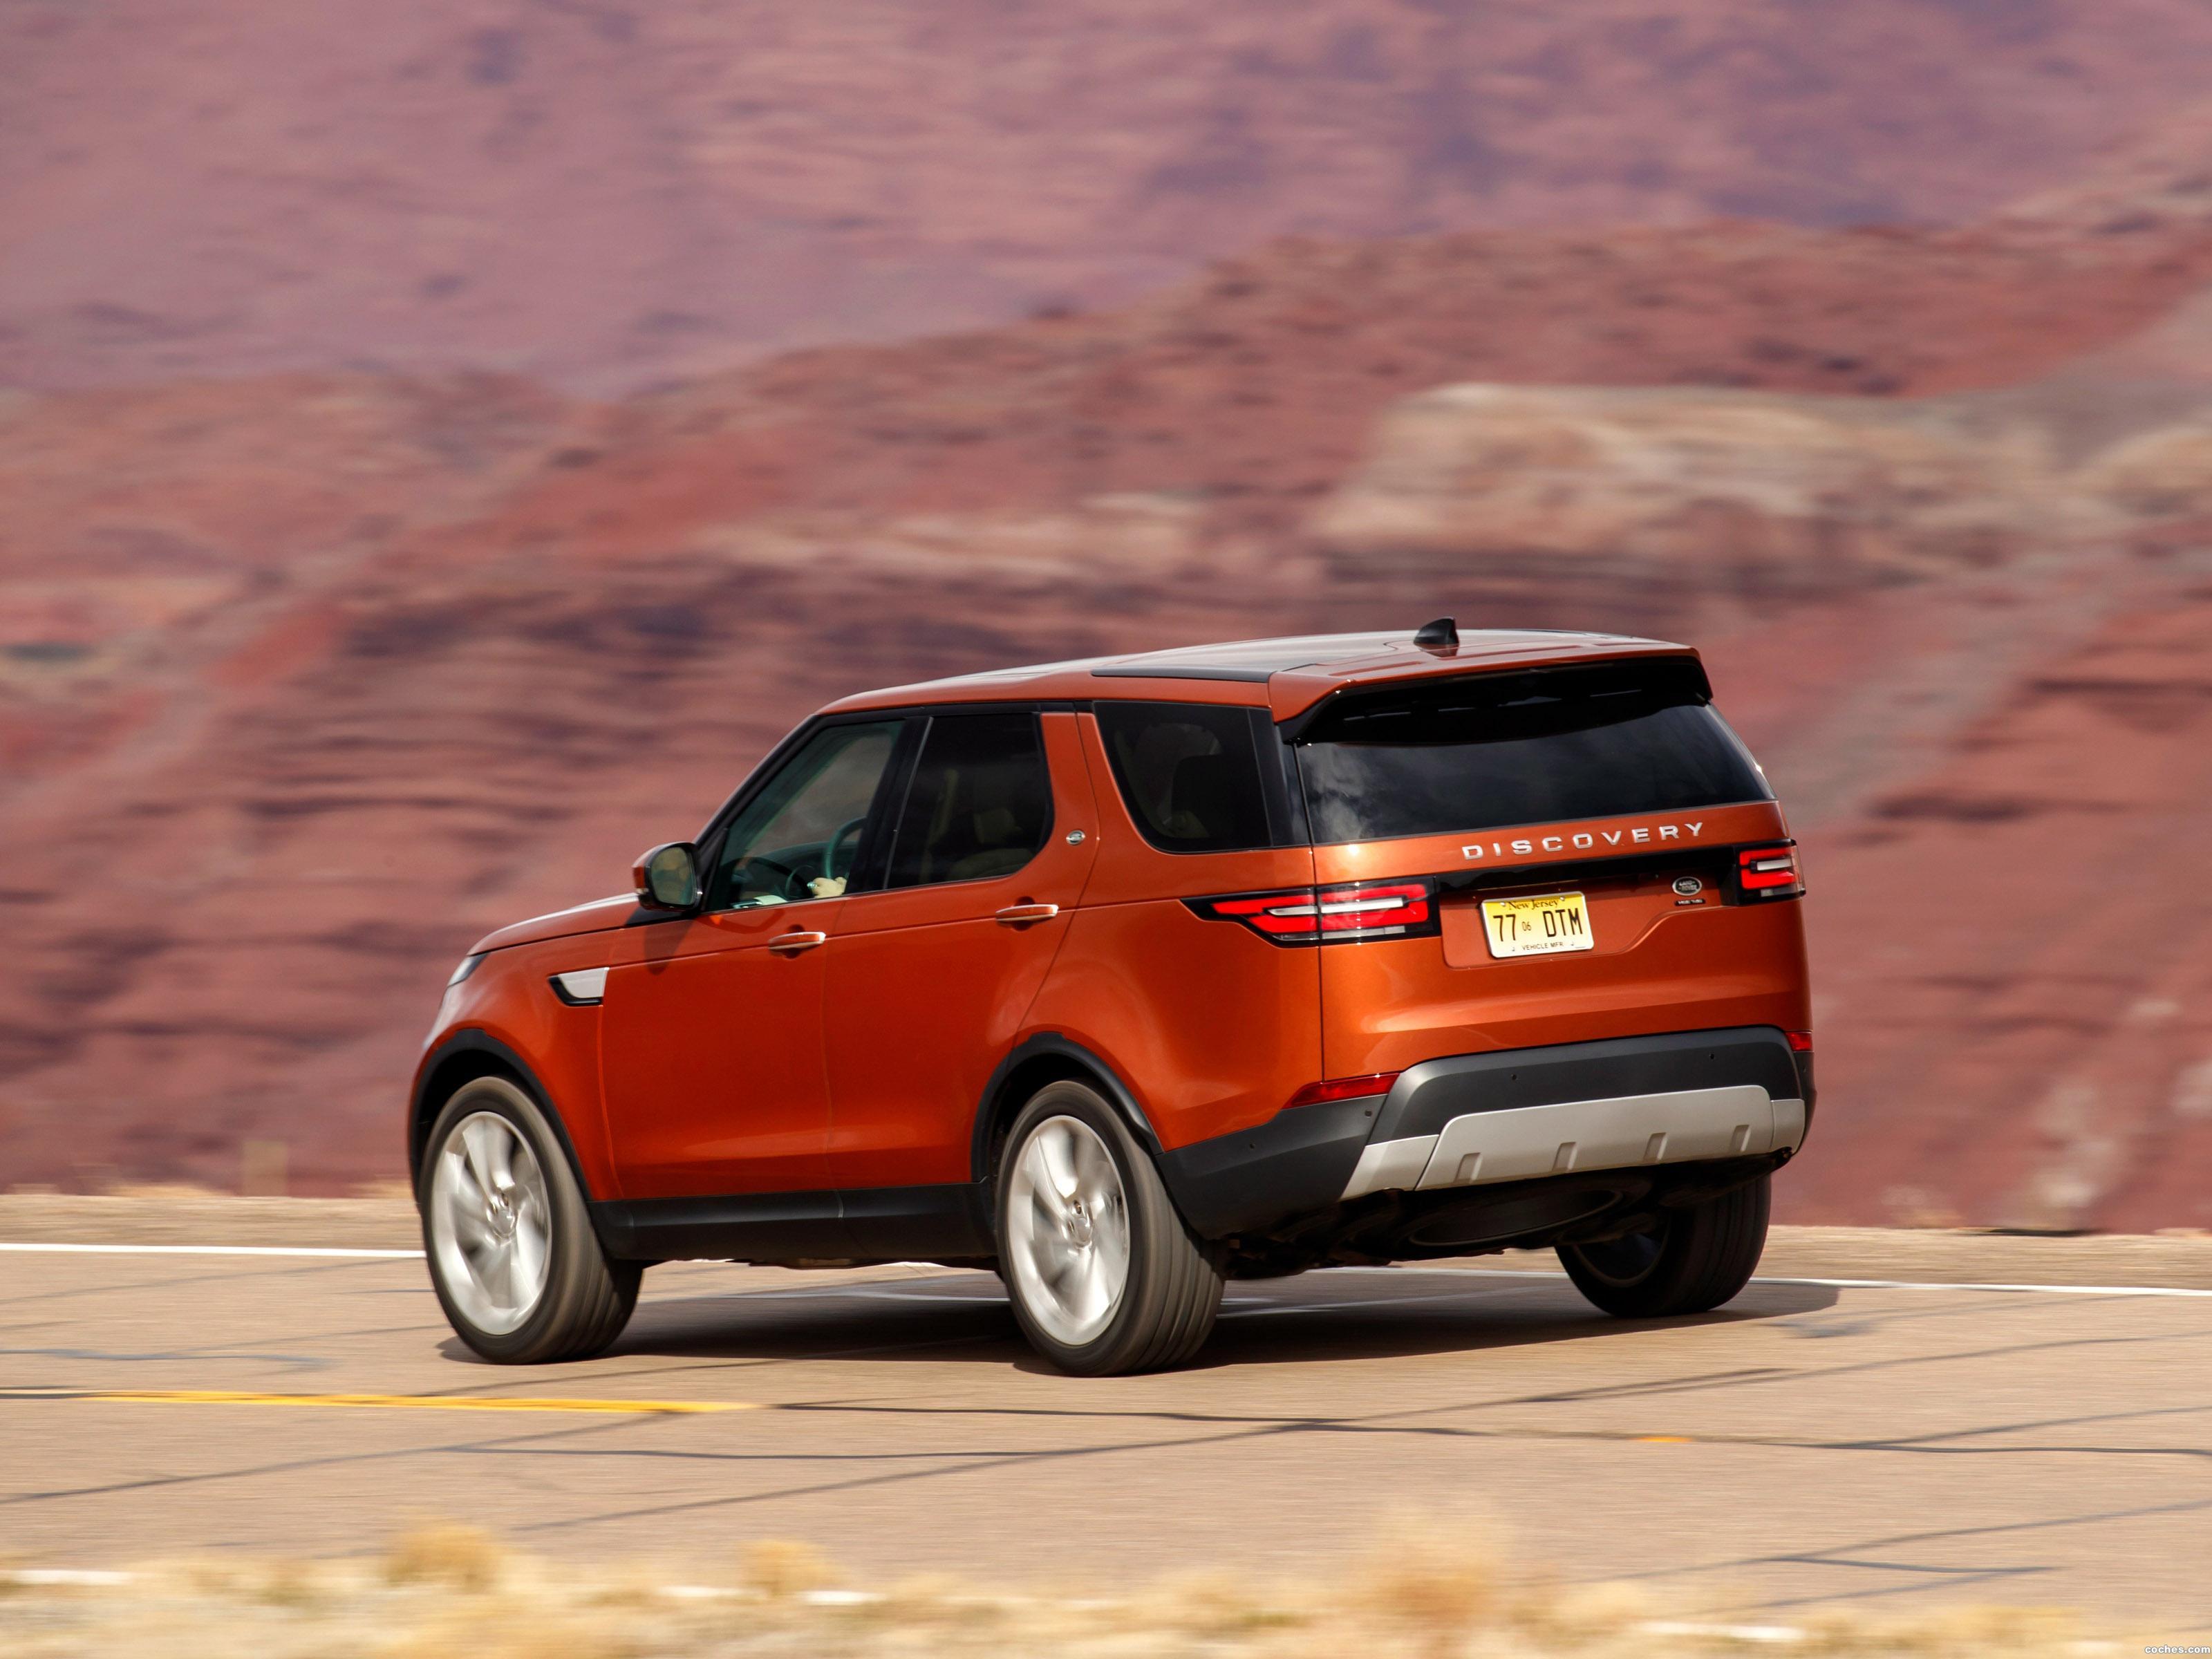 Дискавери 16. Land Rover Discovery Namib Orange. Land Rover Discovery 5 Namib Orange. Land Rover Discovery 70 цвета Namib Orange.. Ленд Ровер Дискавери оранжевого цвета.